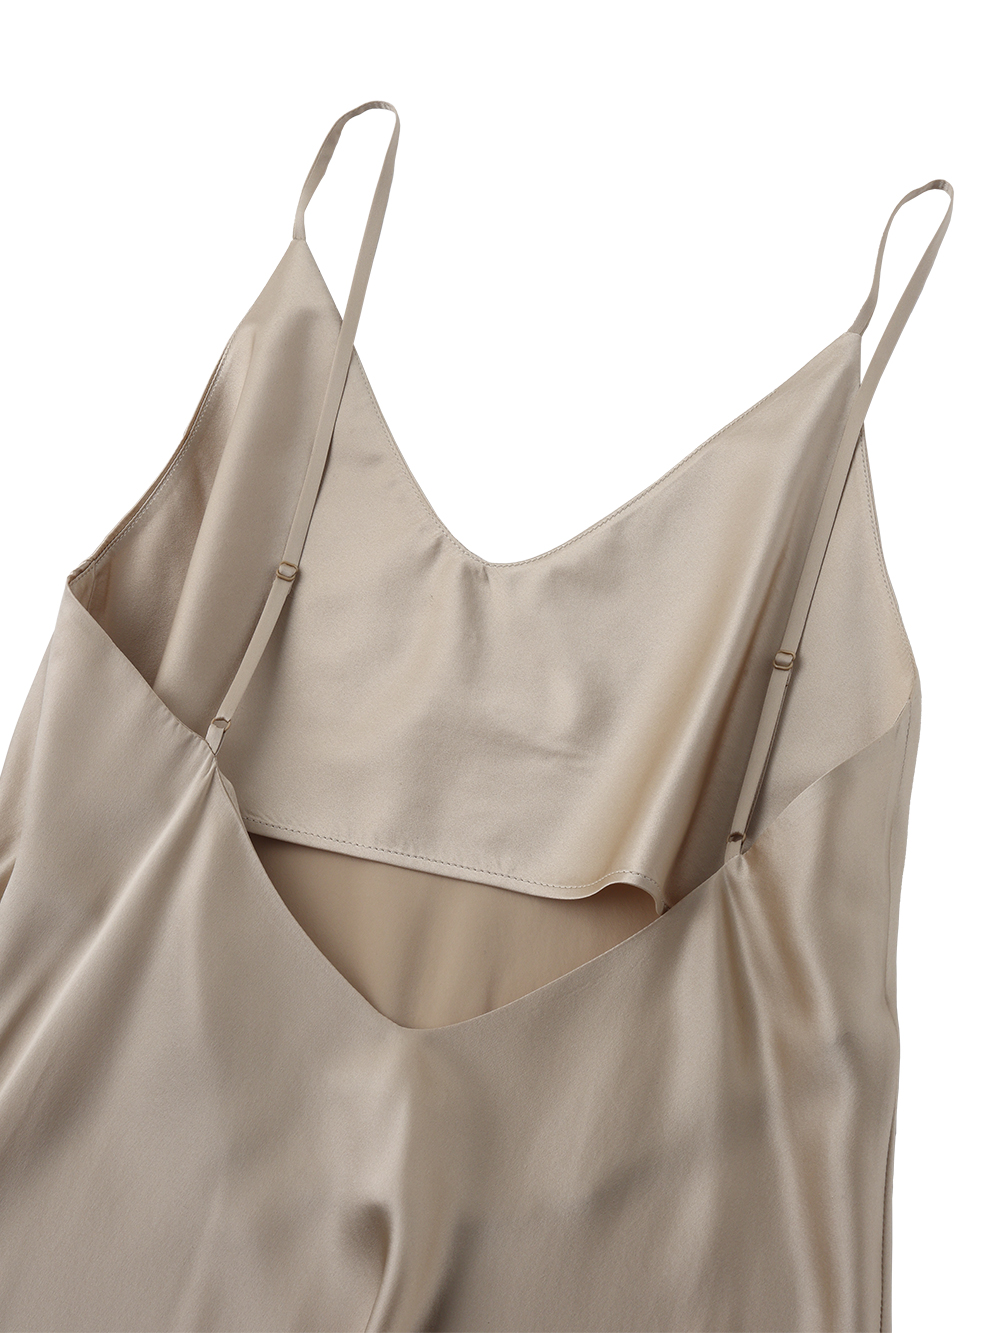 silk back open dress / シルクバックオープンドレス - Priv. Spoons Club